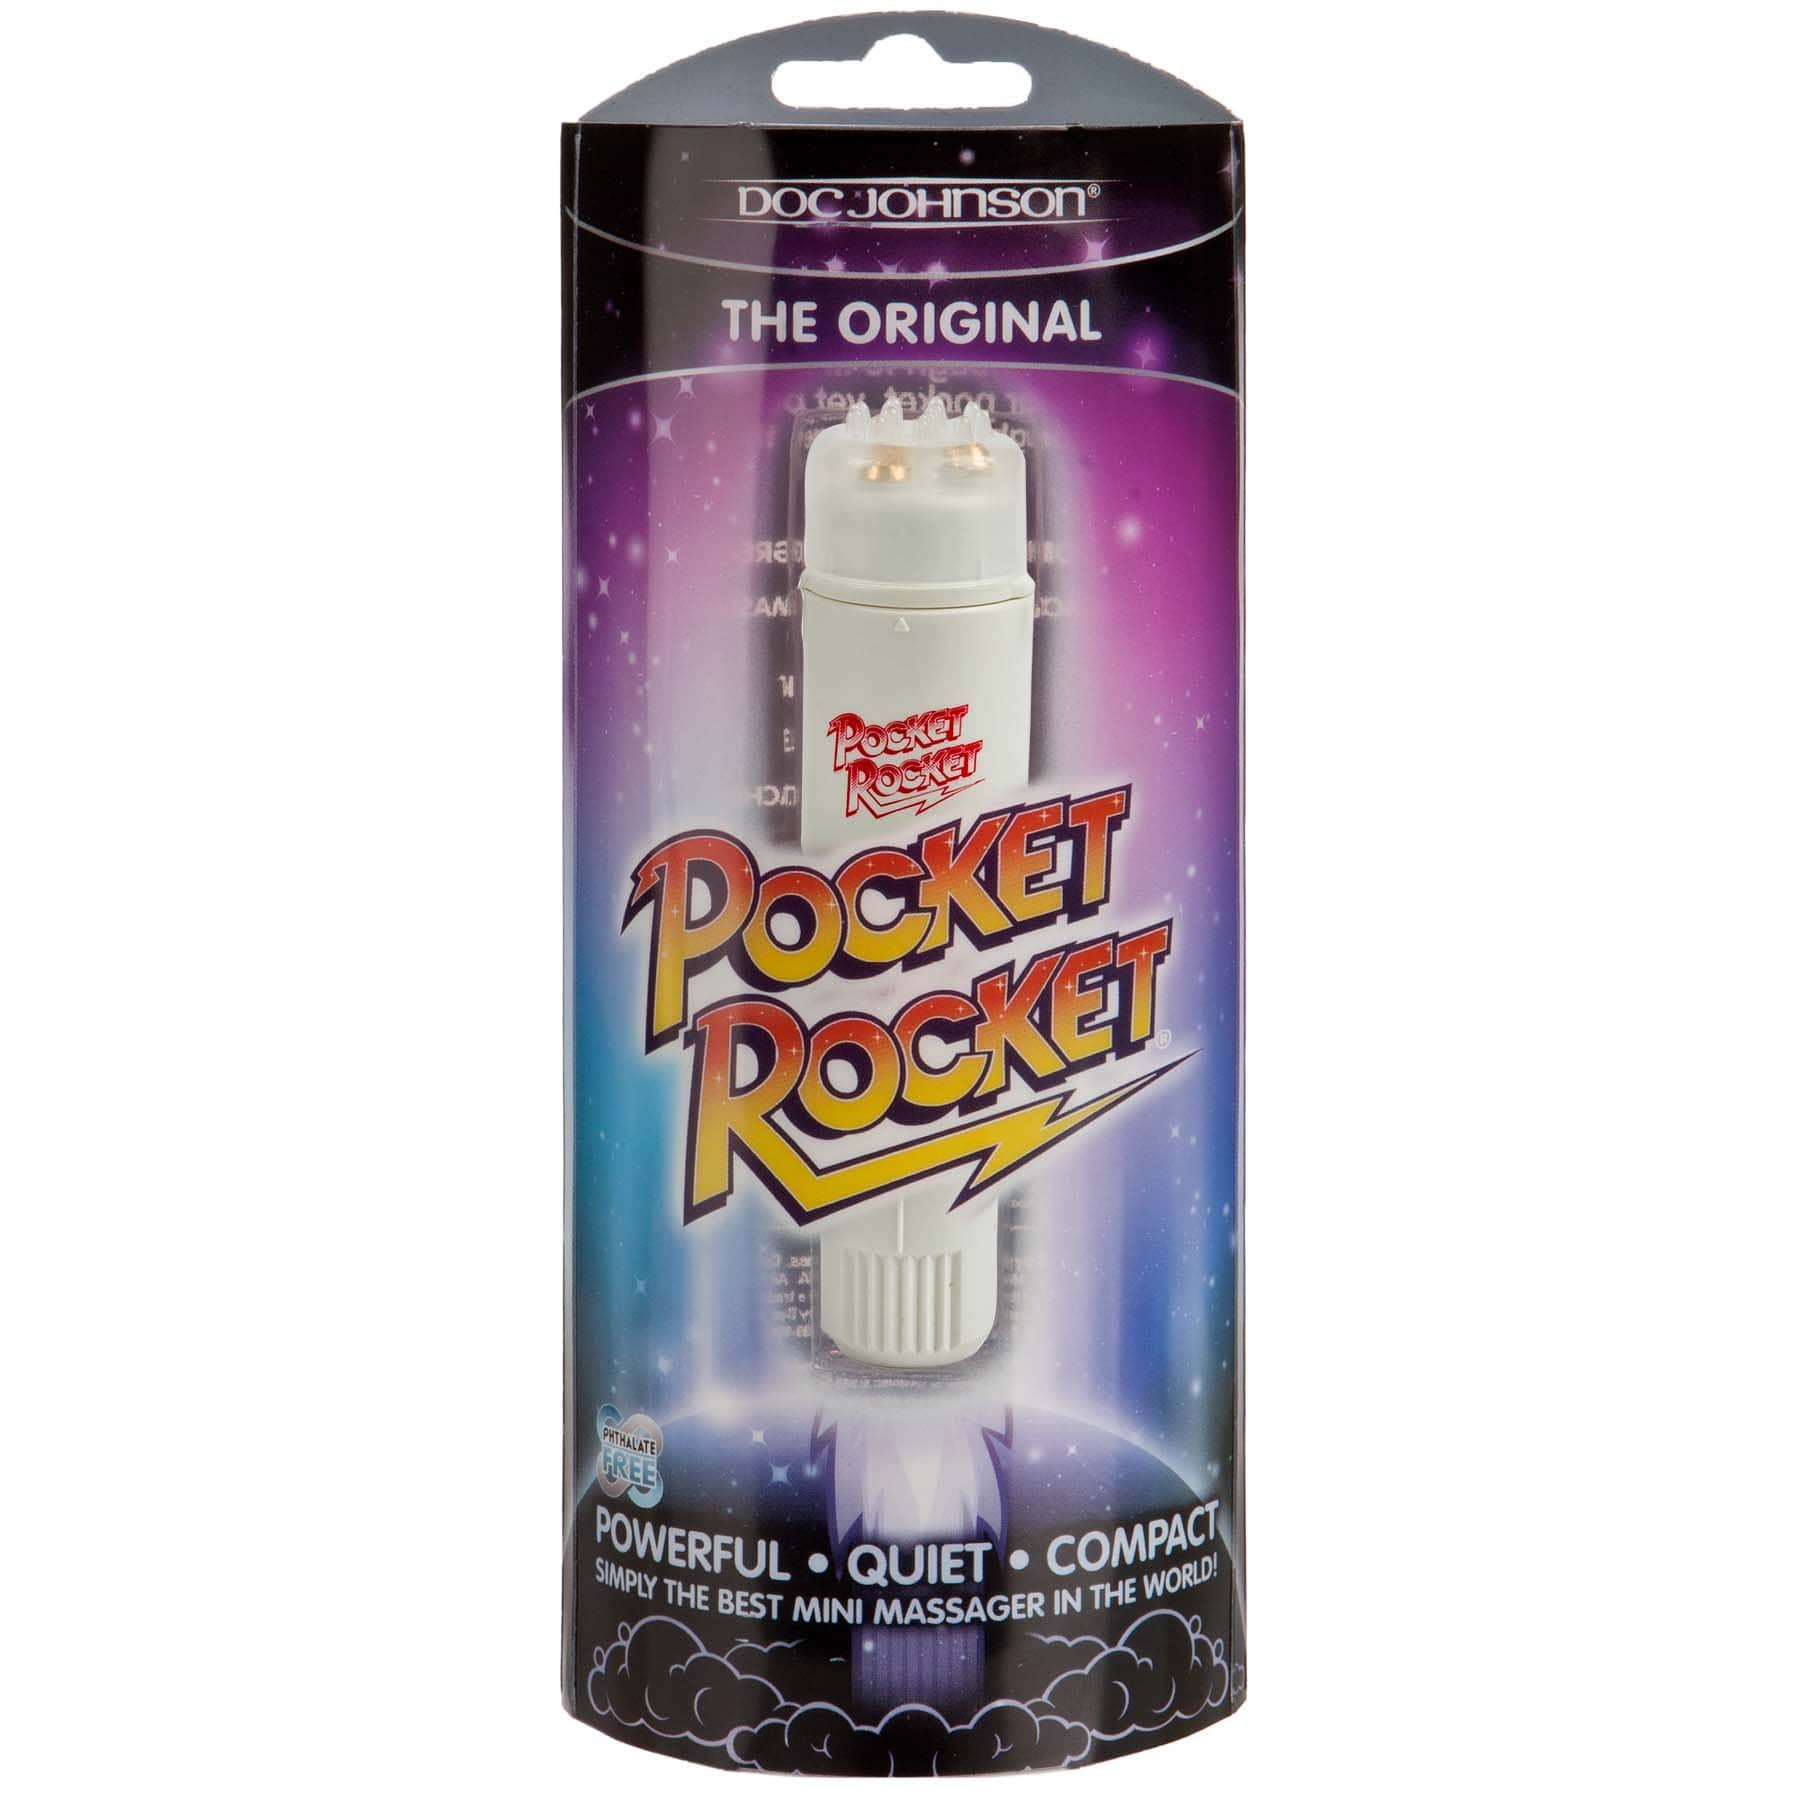 the original pocket rocket white